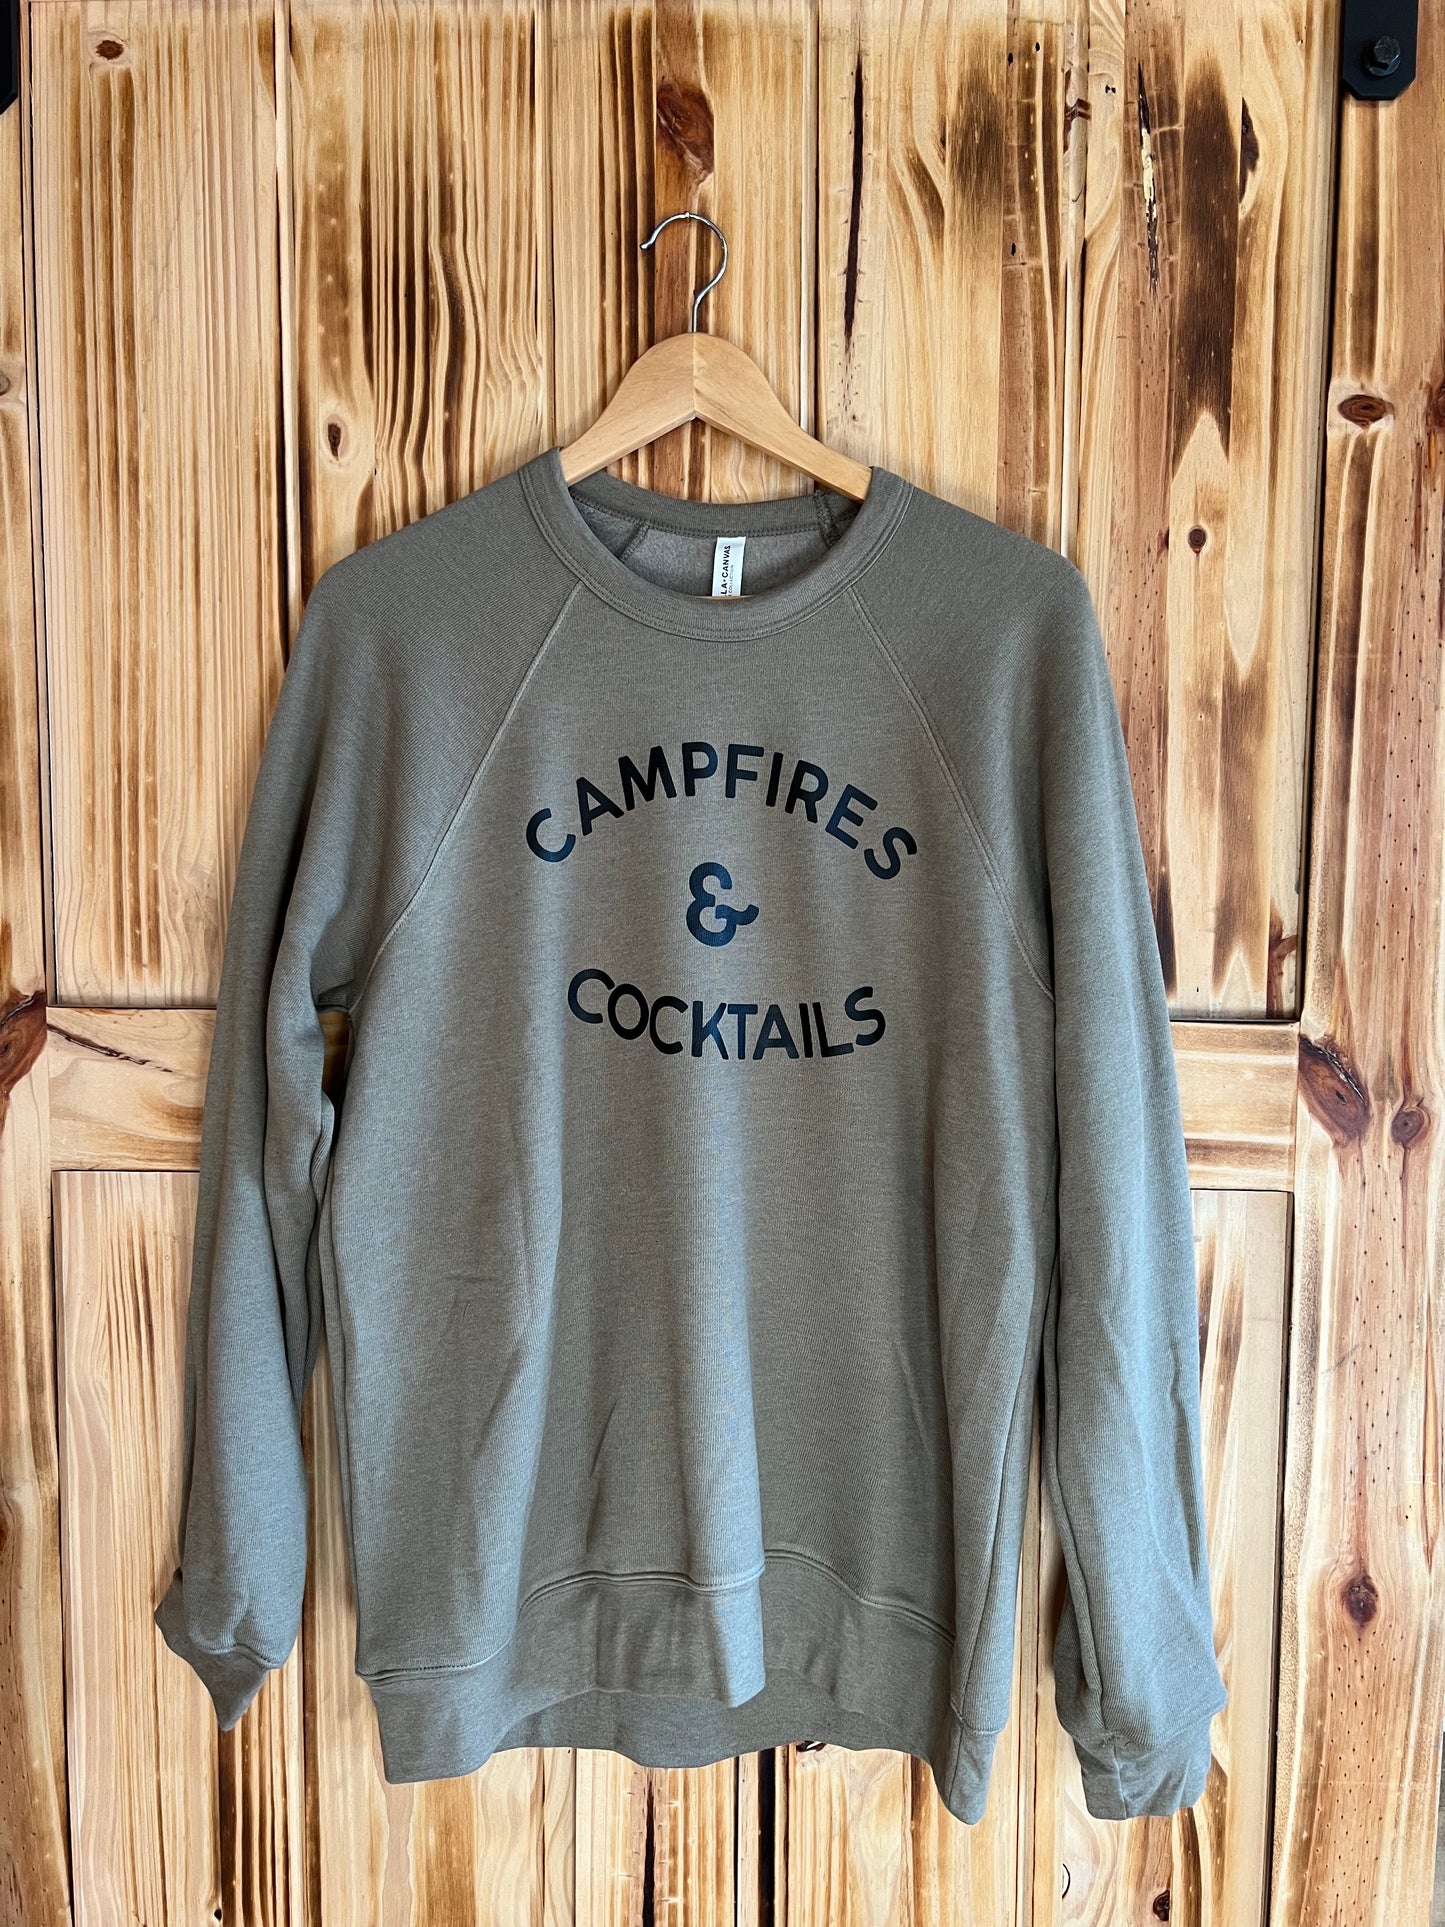 Campfire and Cocktails Crew Sweatshirt